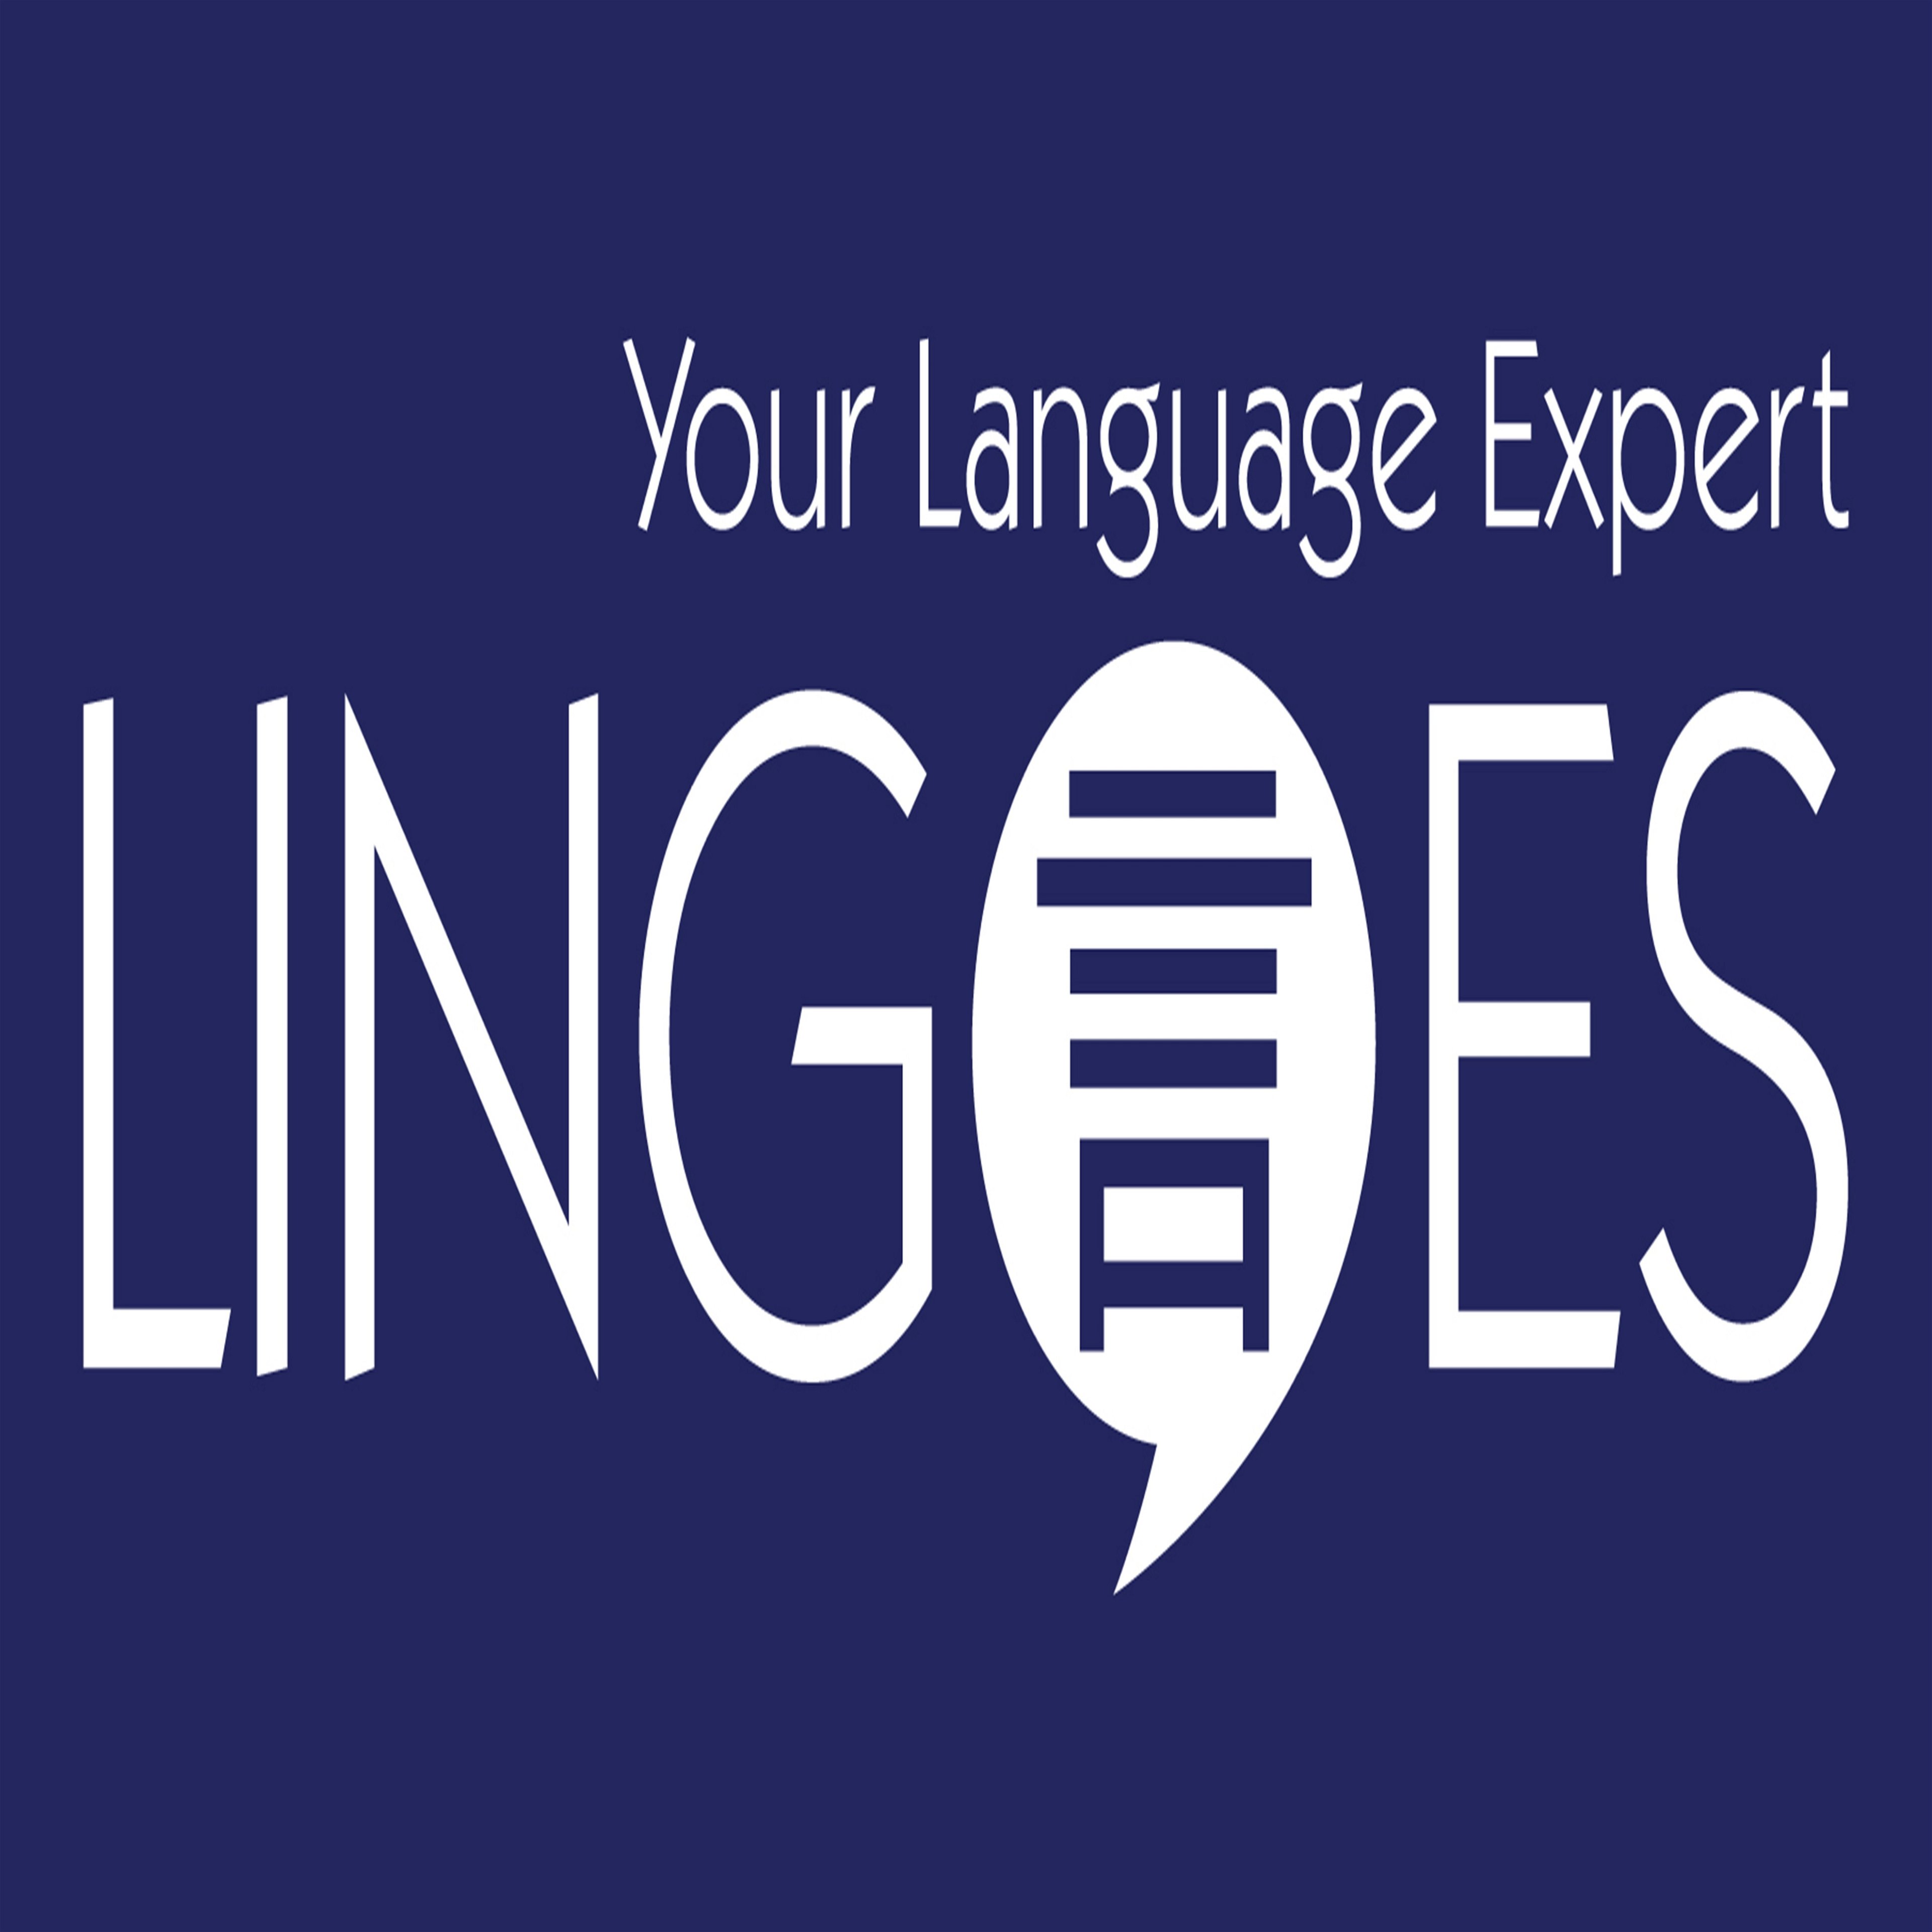 The Lingoes Ltd logo